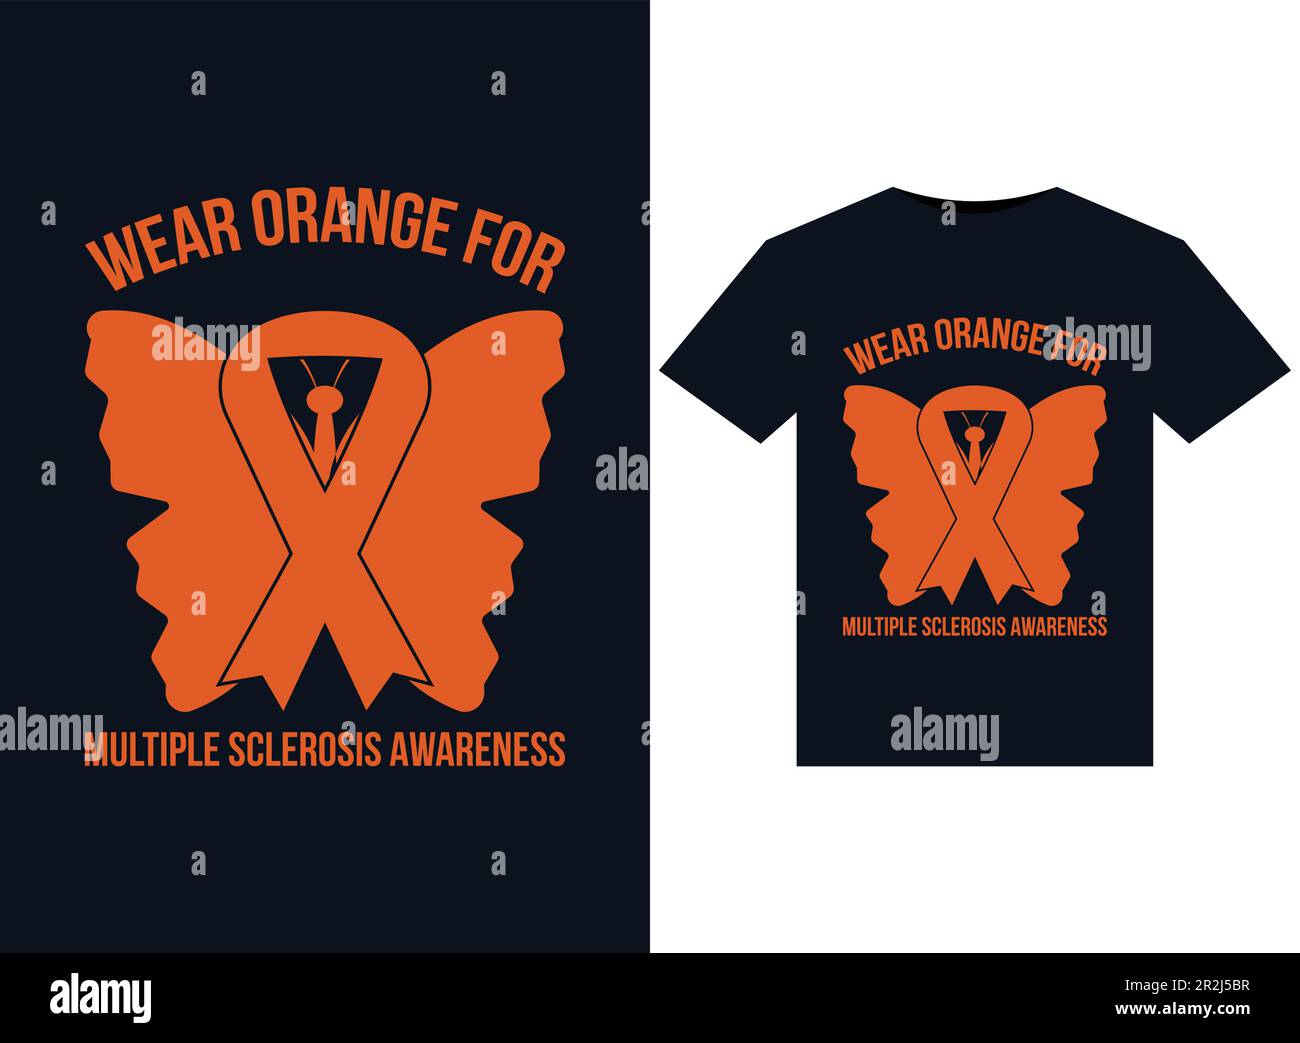 Wear Orange For Multiple Sclerosis Awareness illustrations for print ...